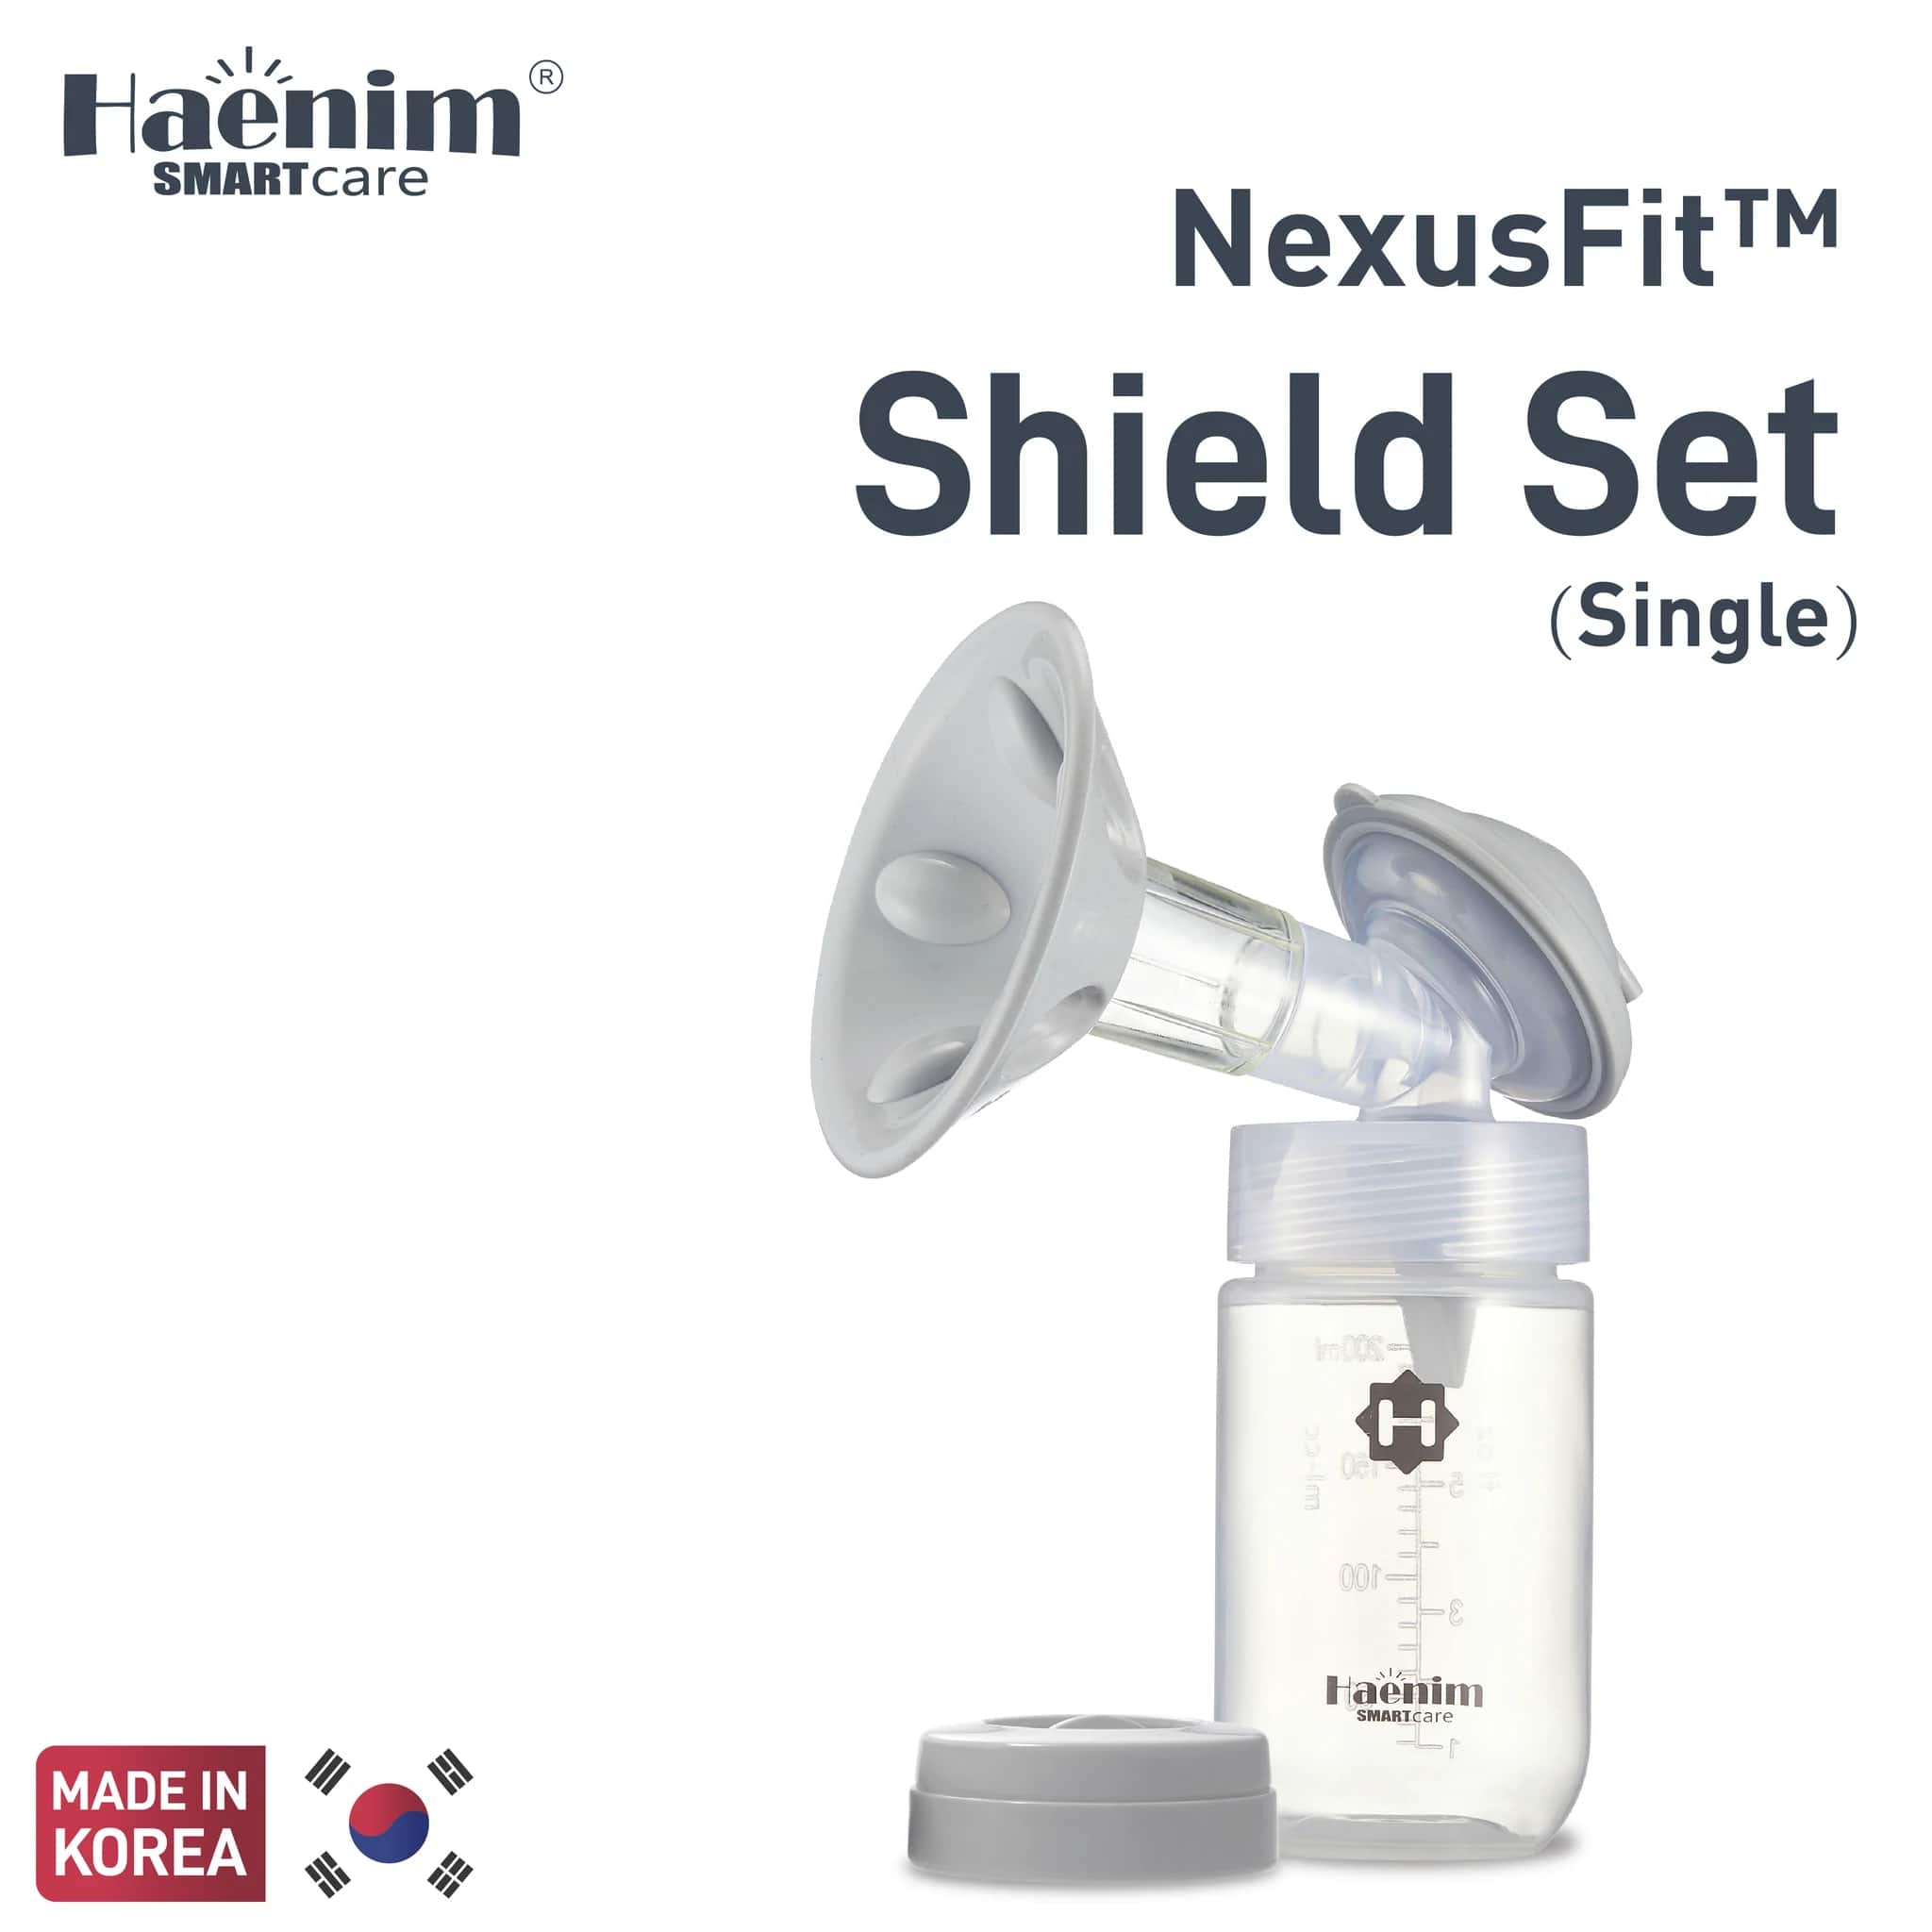 Haenim NexusFit Shield Set (Single Pack)